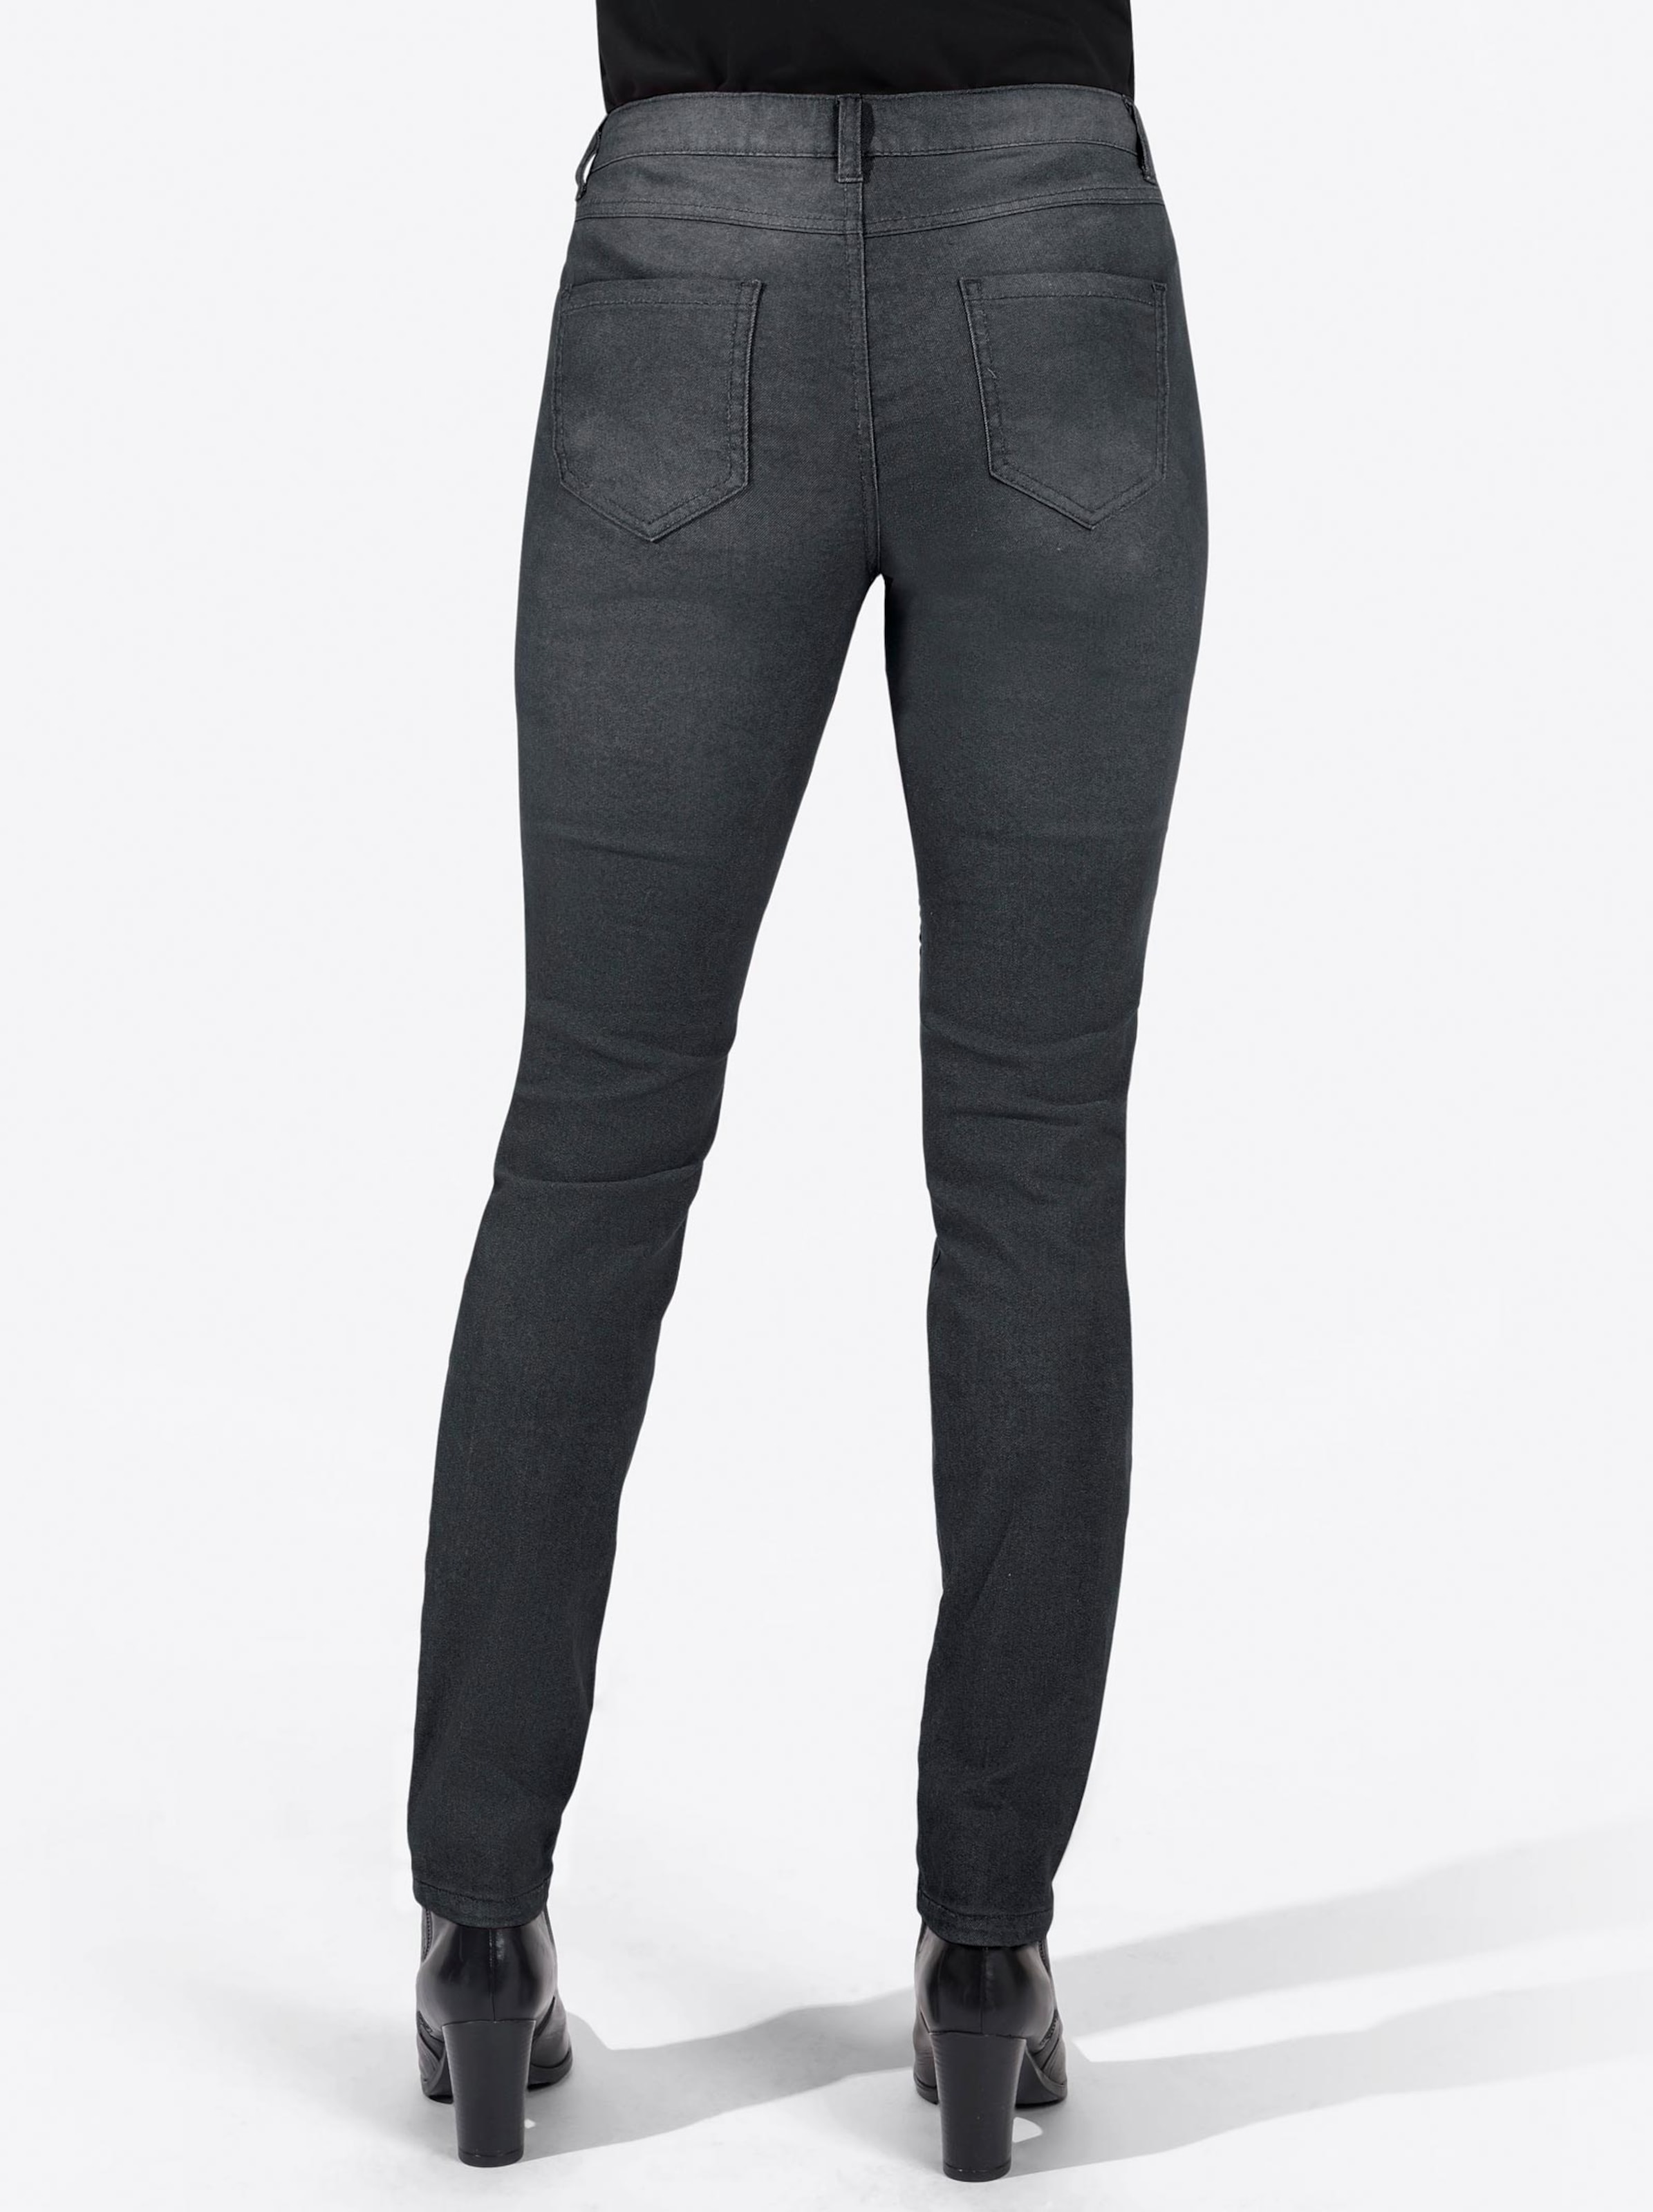 Damenmode Jeans Jeans in black-denim 